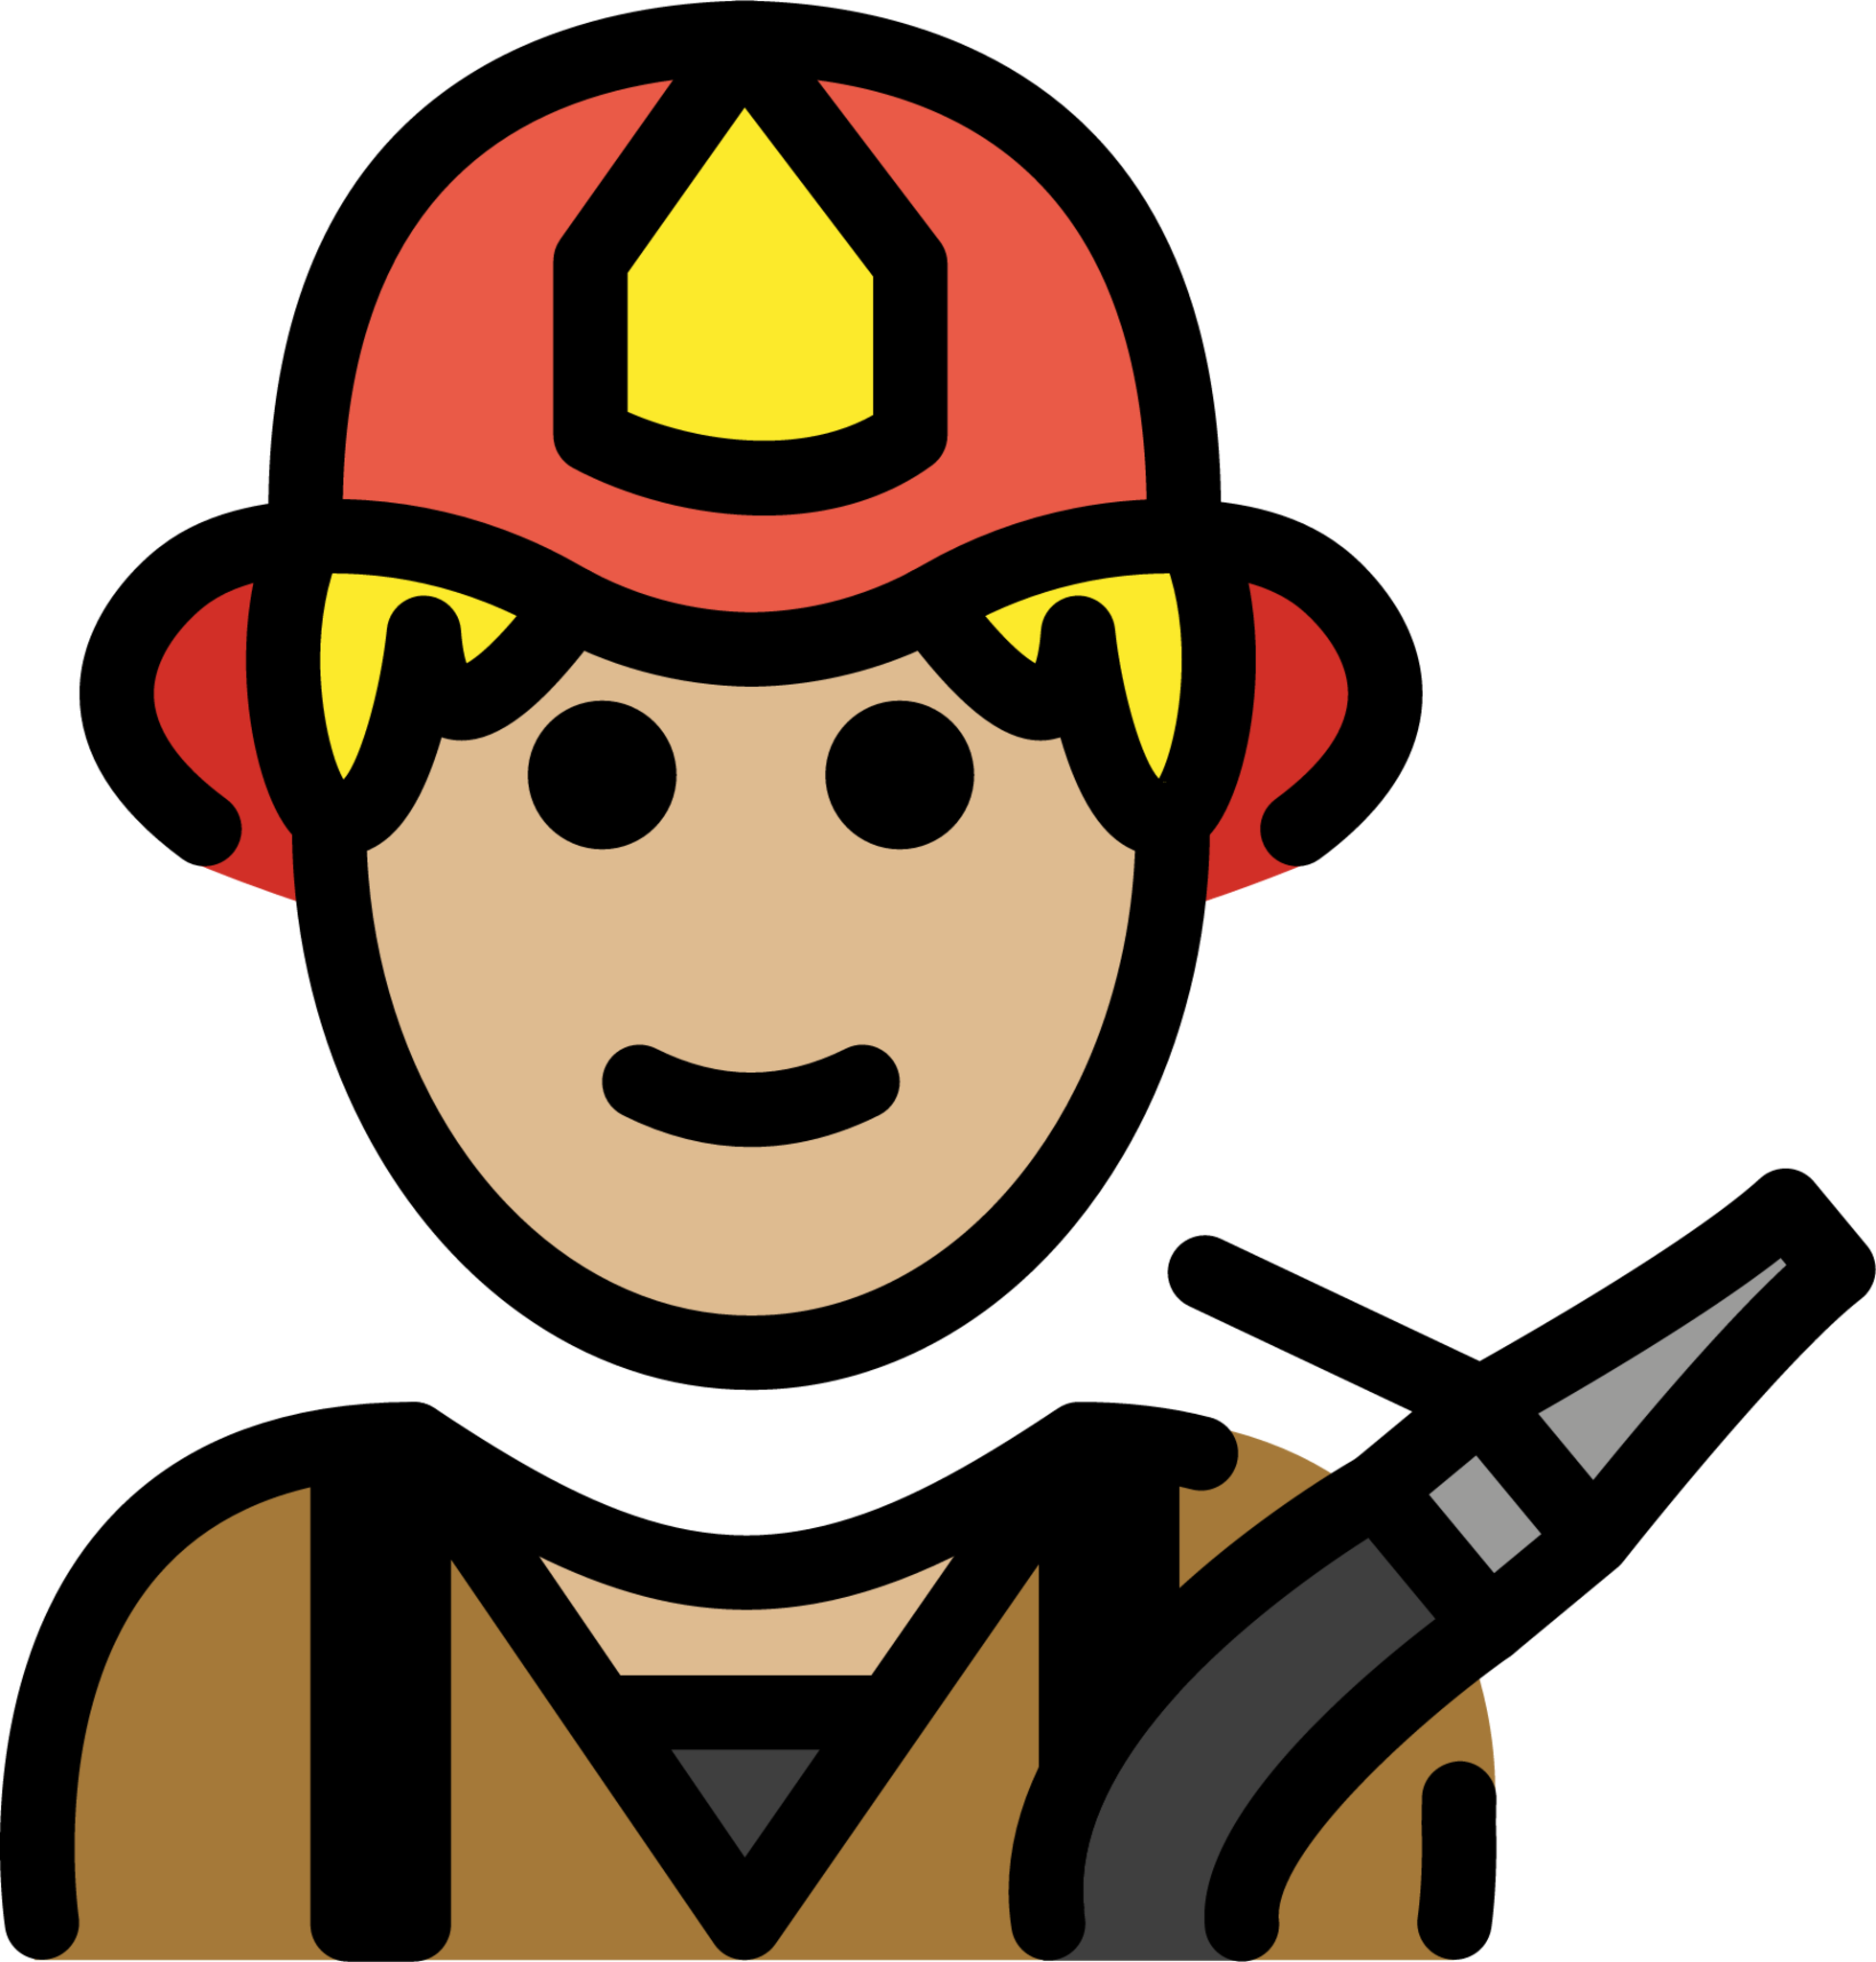 man firefighter: medium-light skin tone emoji